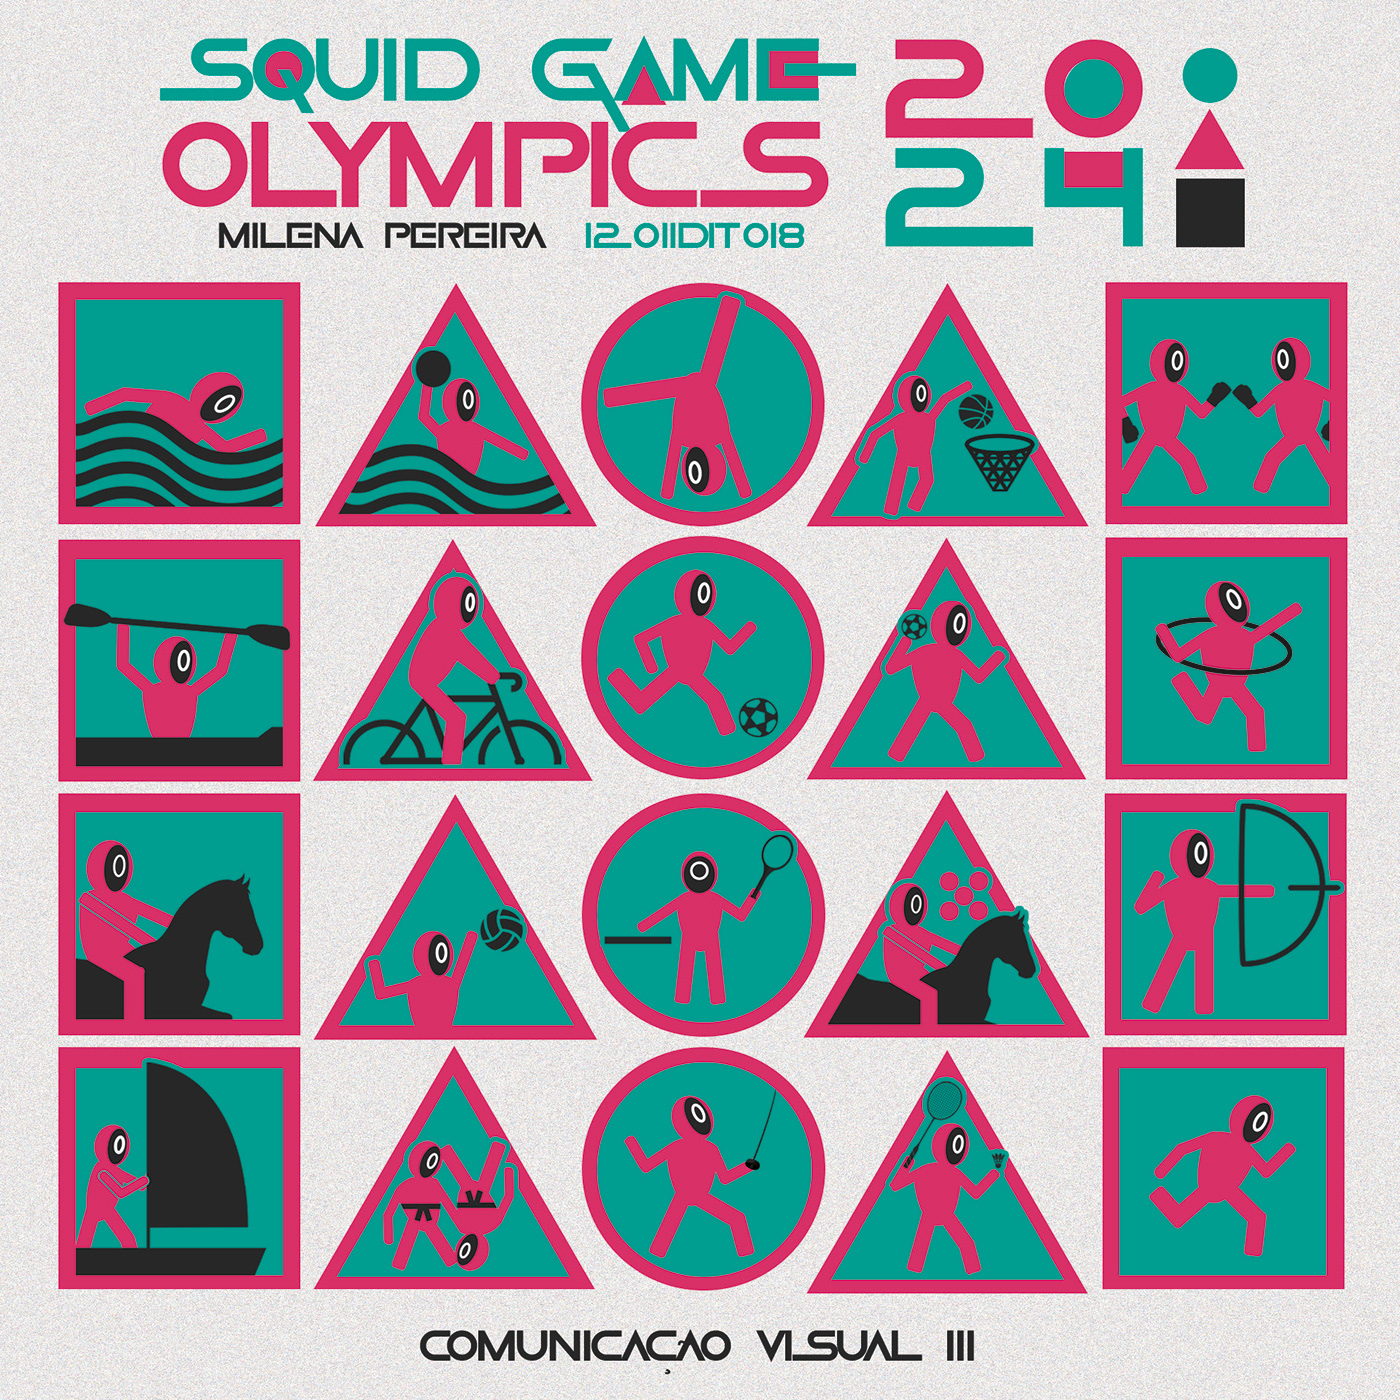 Netflix Olympics pictogram series squid game